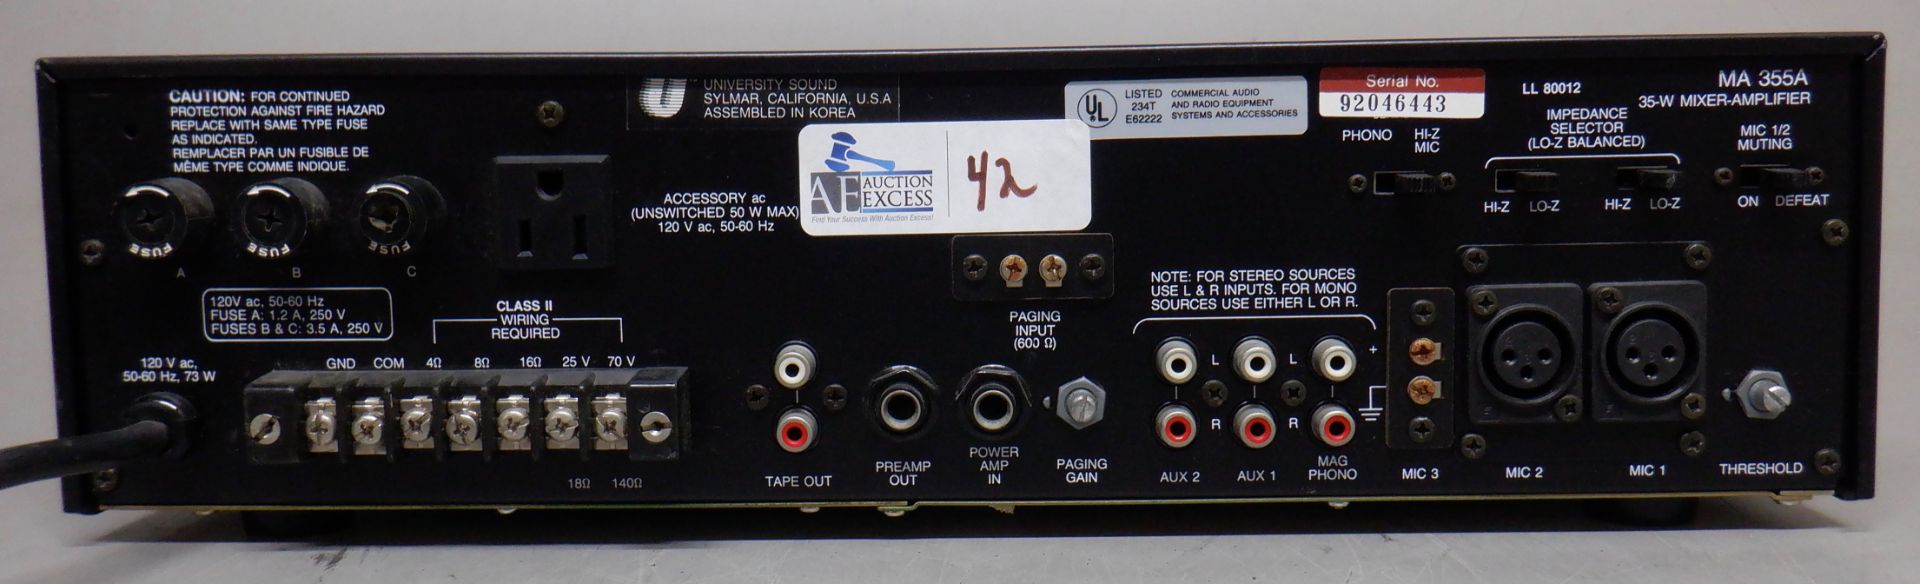 UNIVERSITY SOUND MA355A MIXER AMP - Image 2 of 2